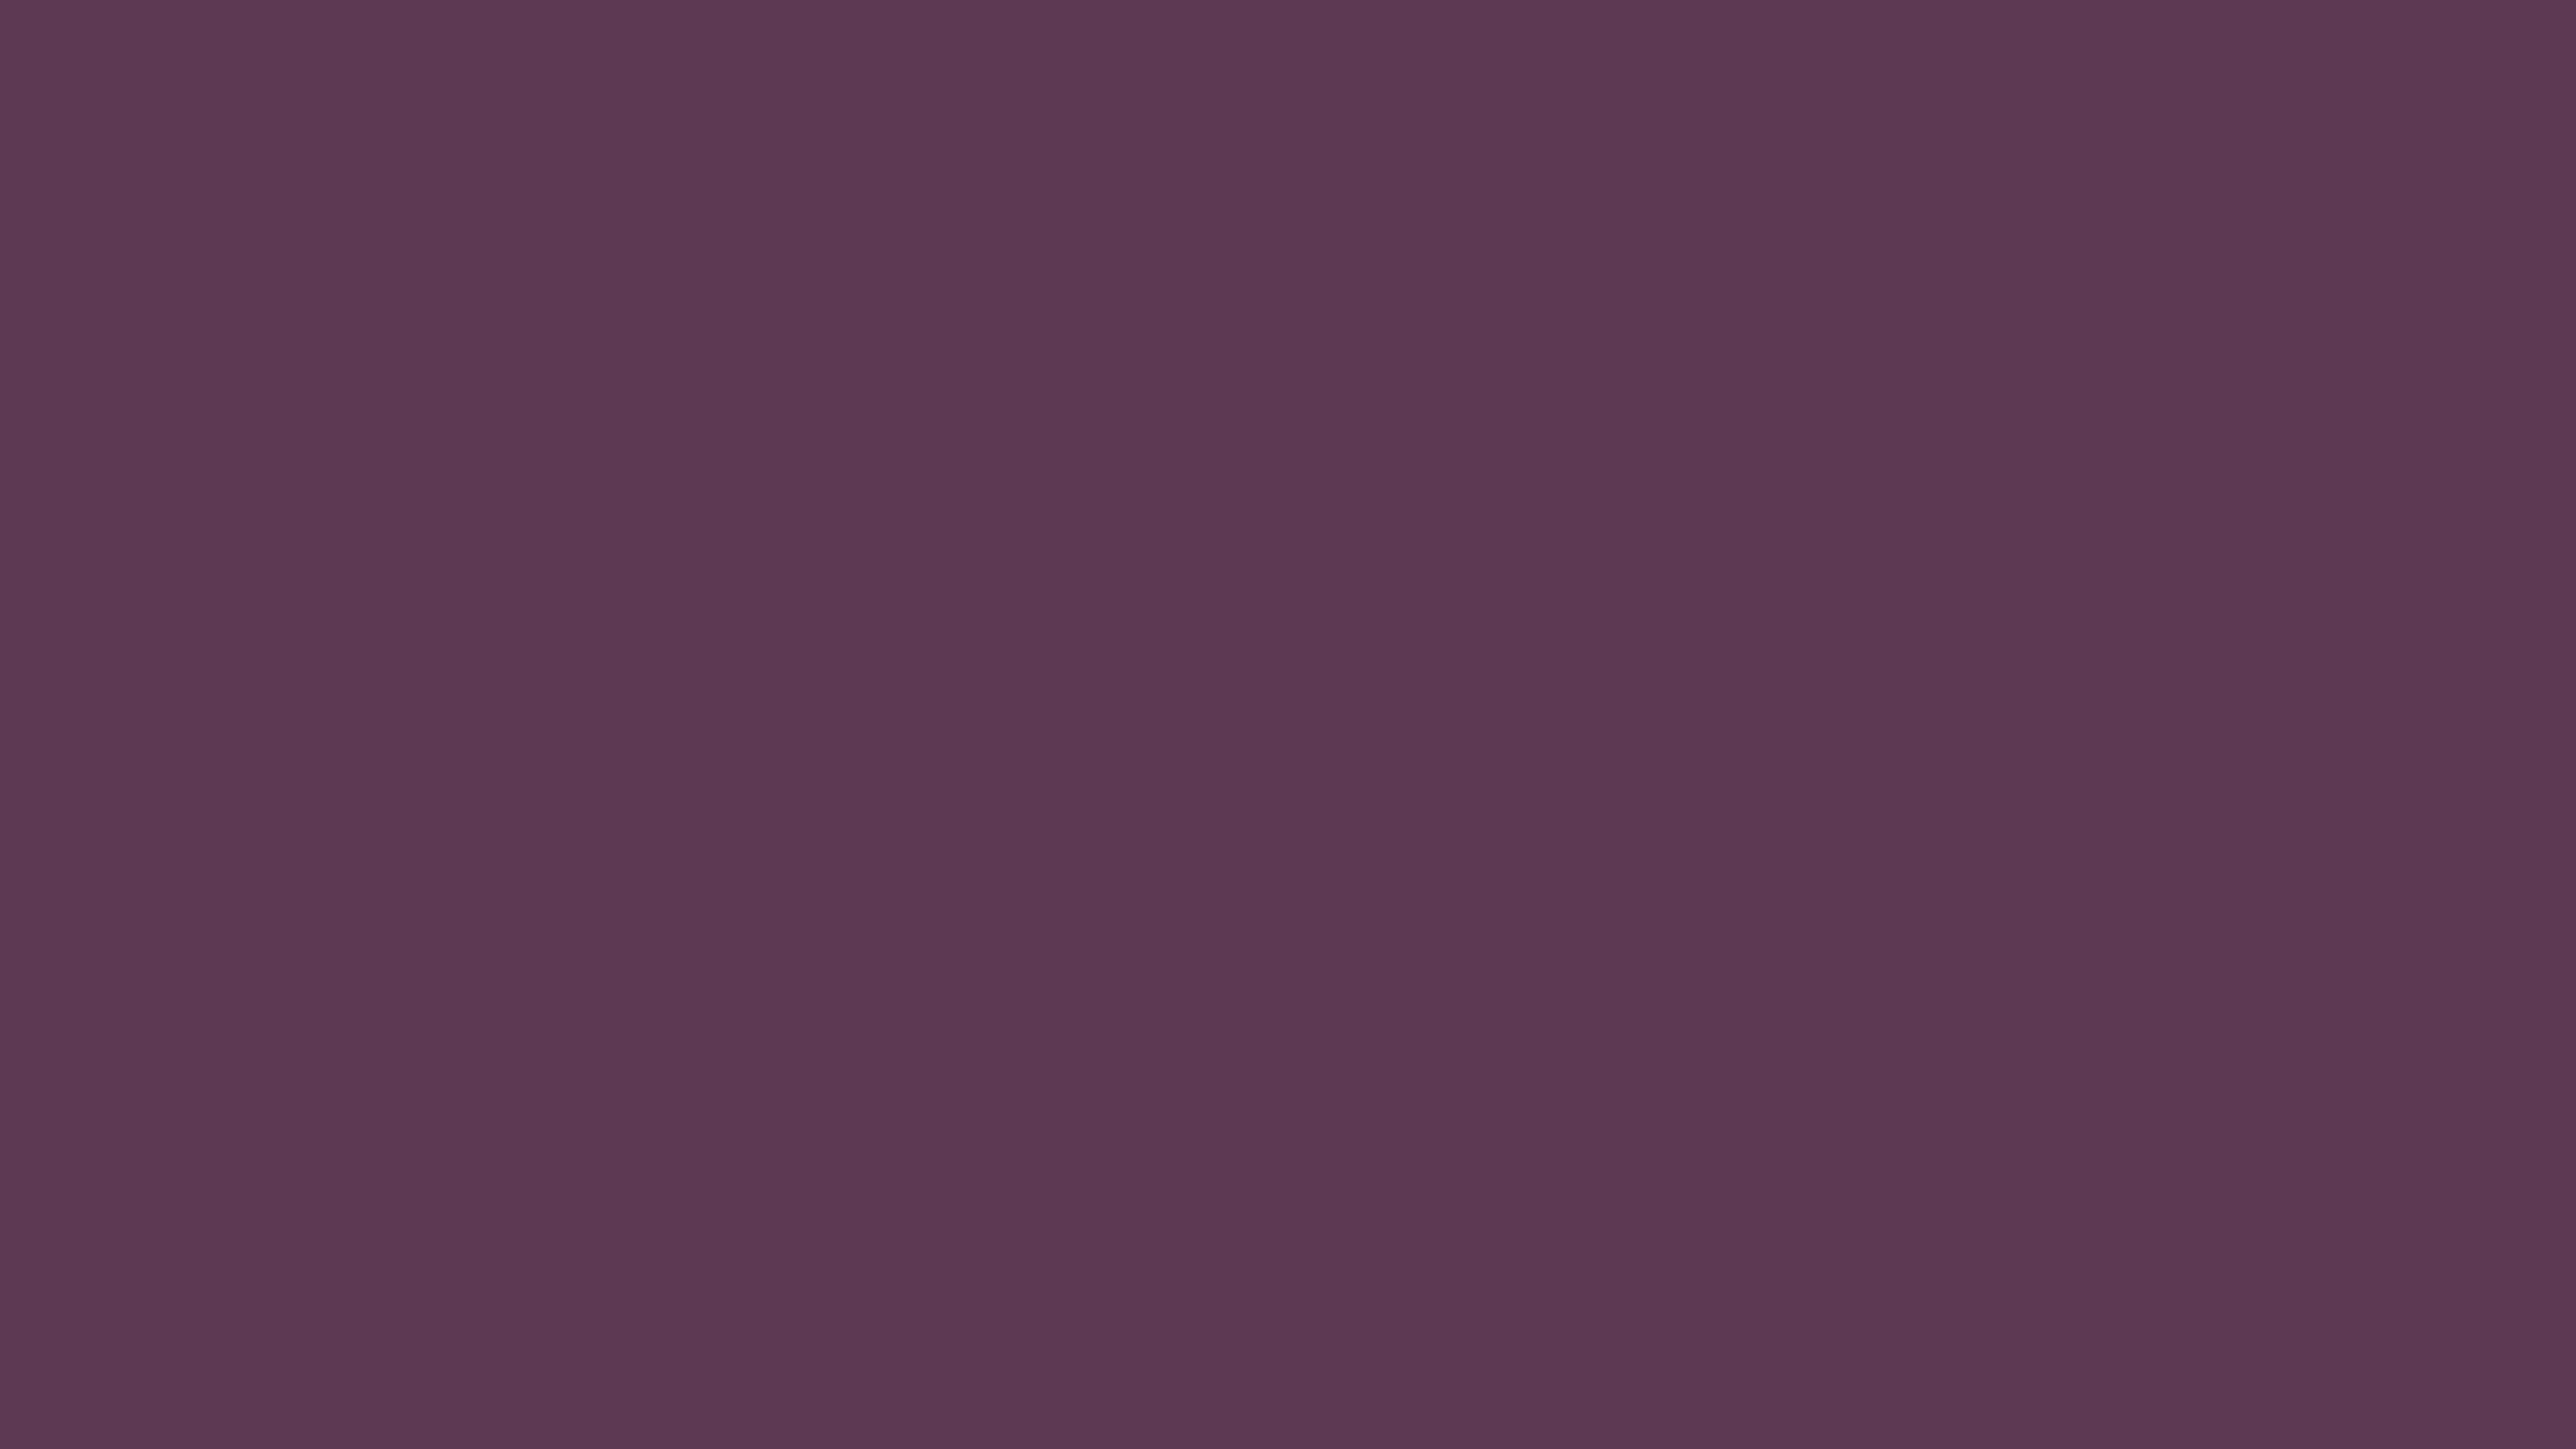 7680x4320 Dark Byzantium Solid Color Background